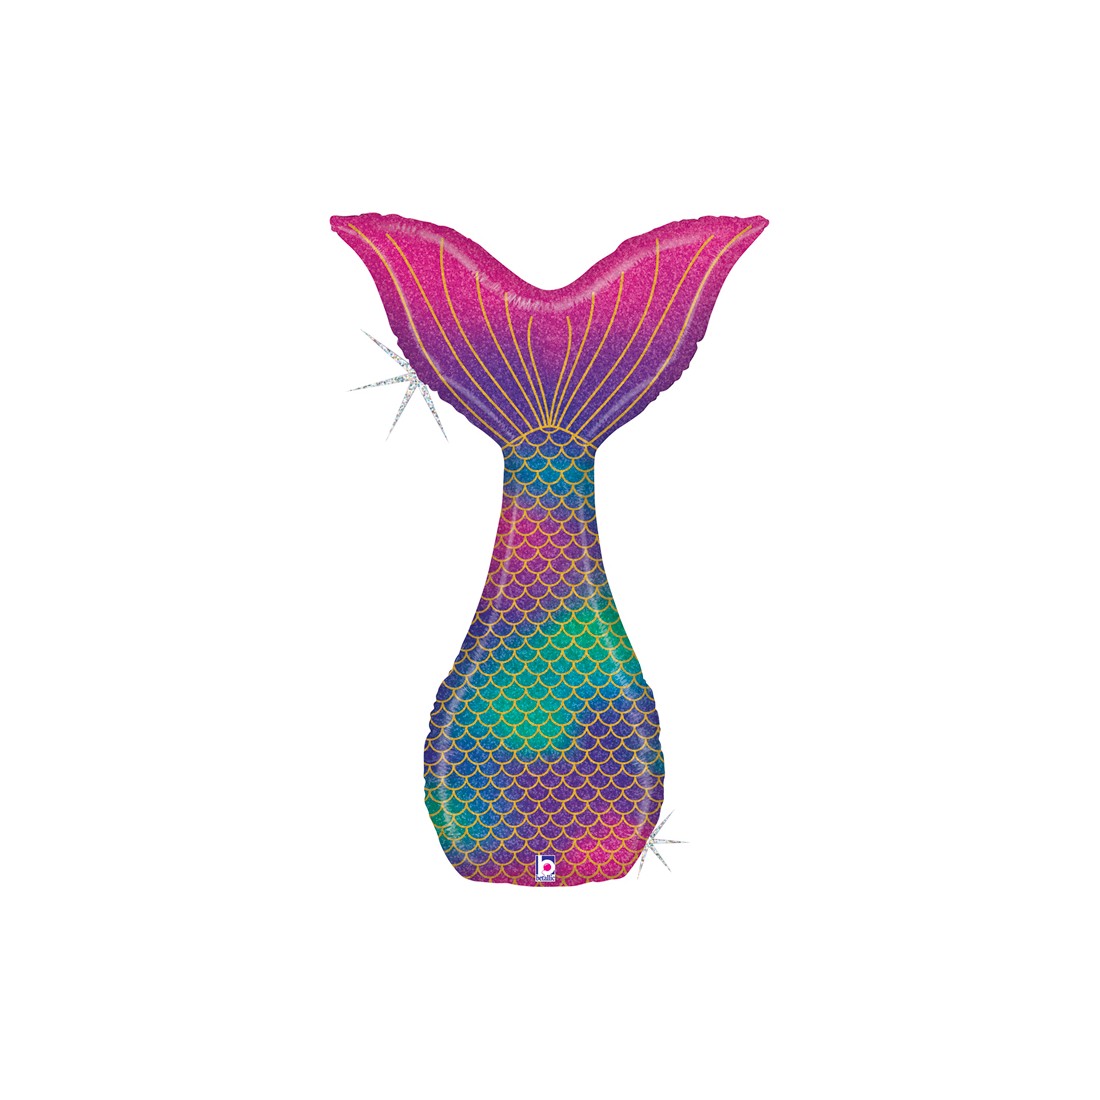 Coda Sirena Glitter Hologr. 117 cm